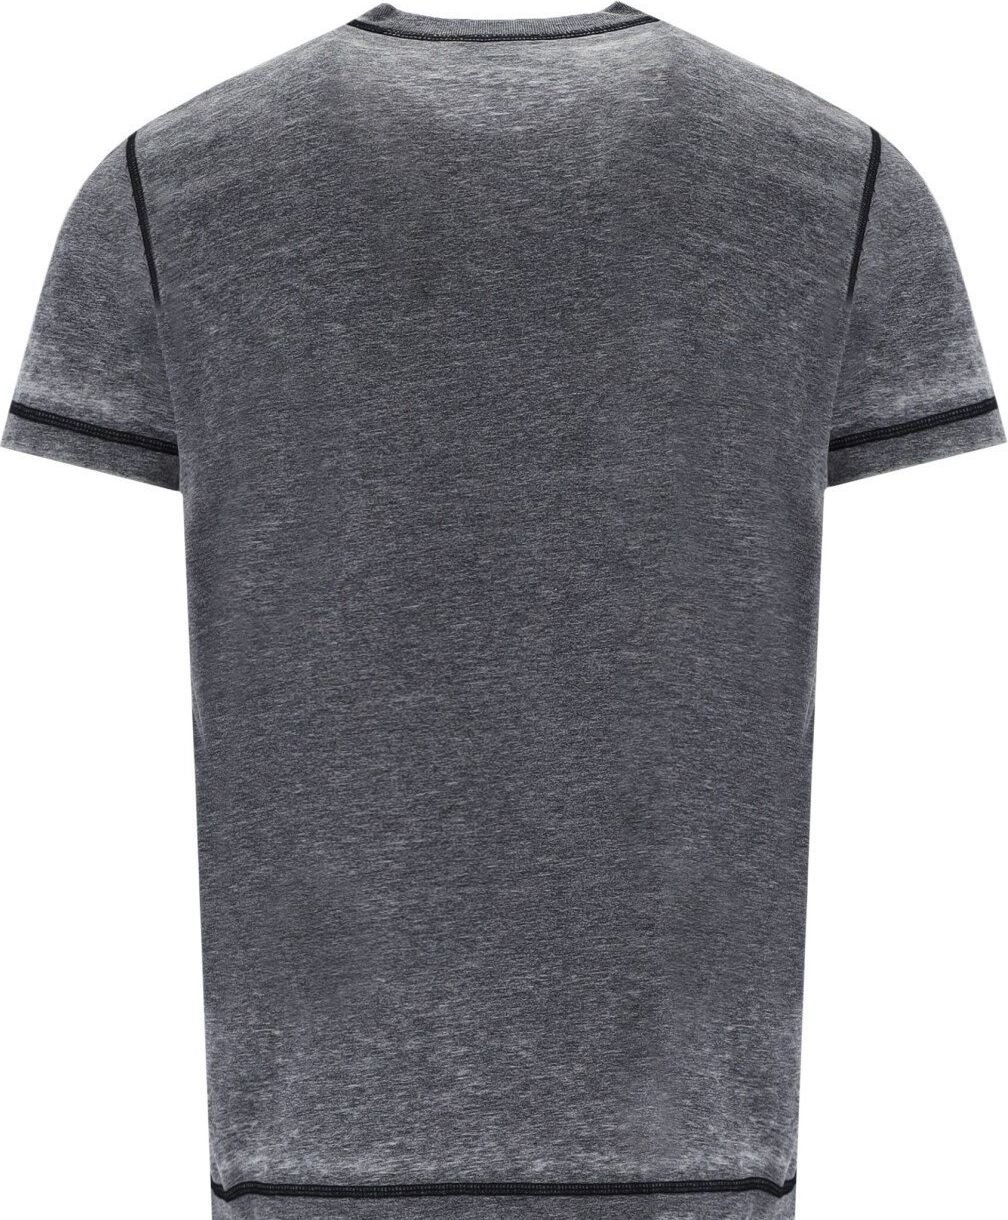 Diesel T-diegor-l1 Grey T-shirt Gray Grijs